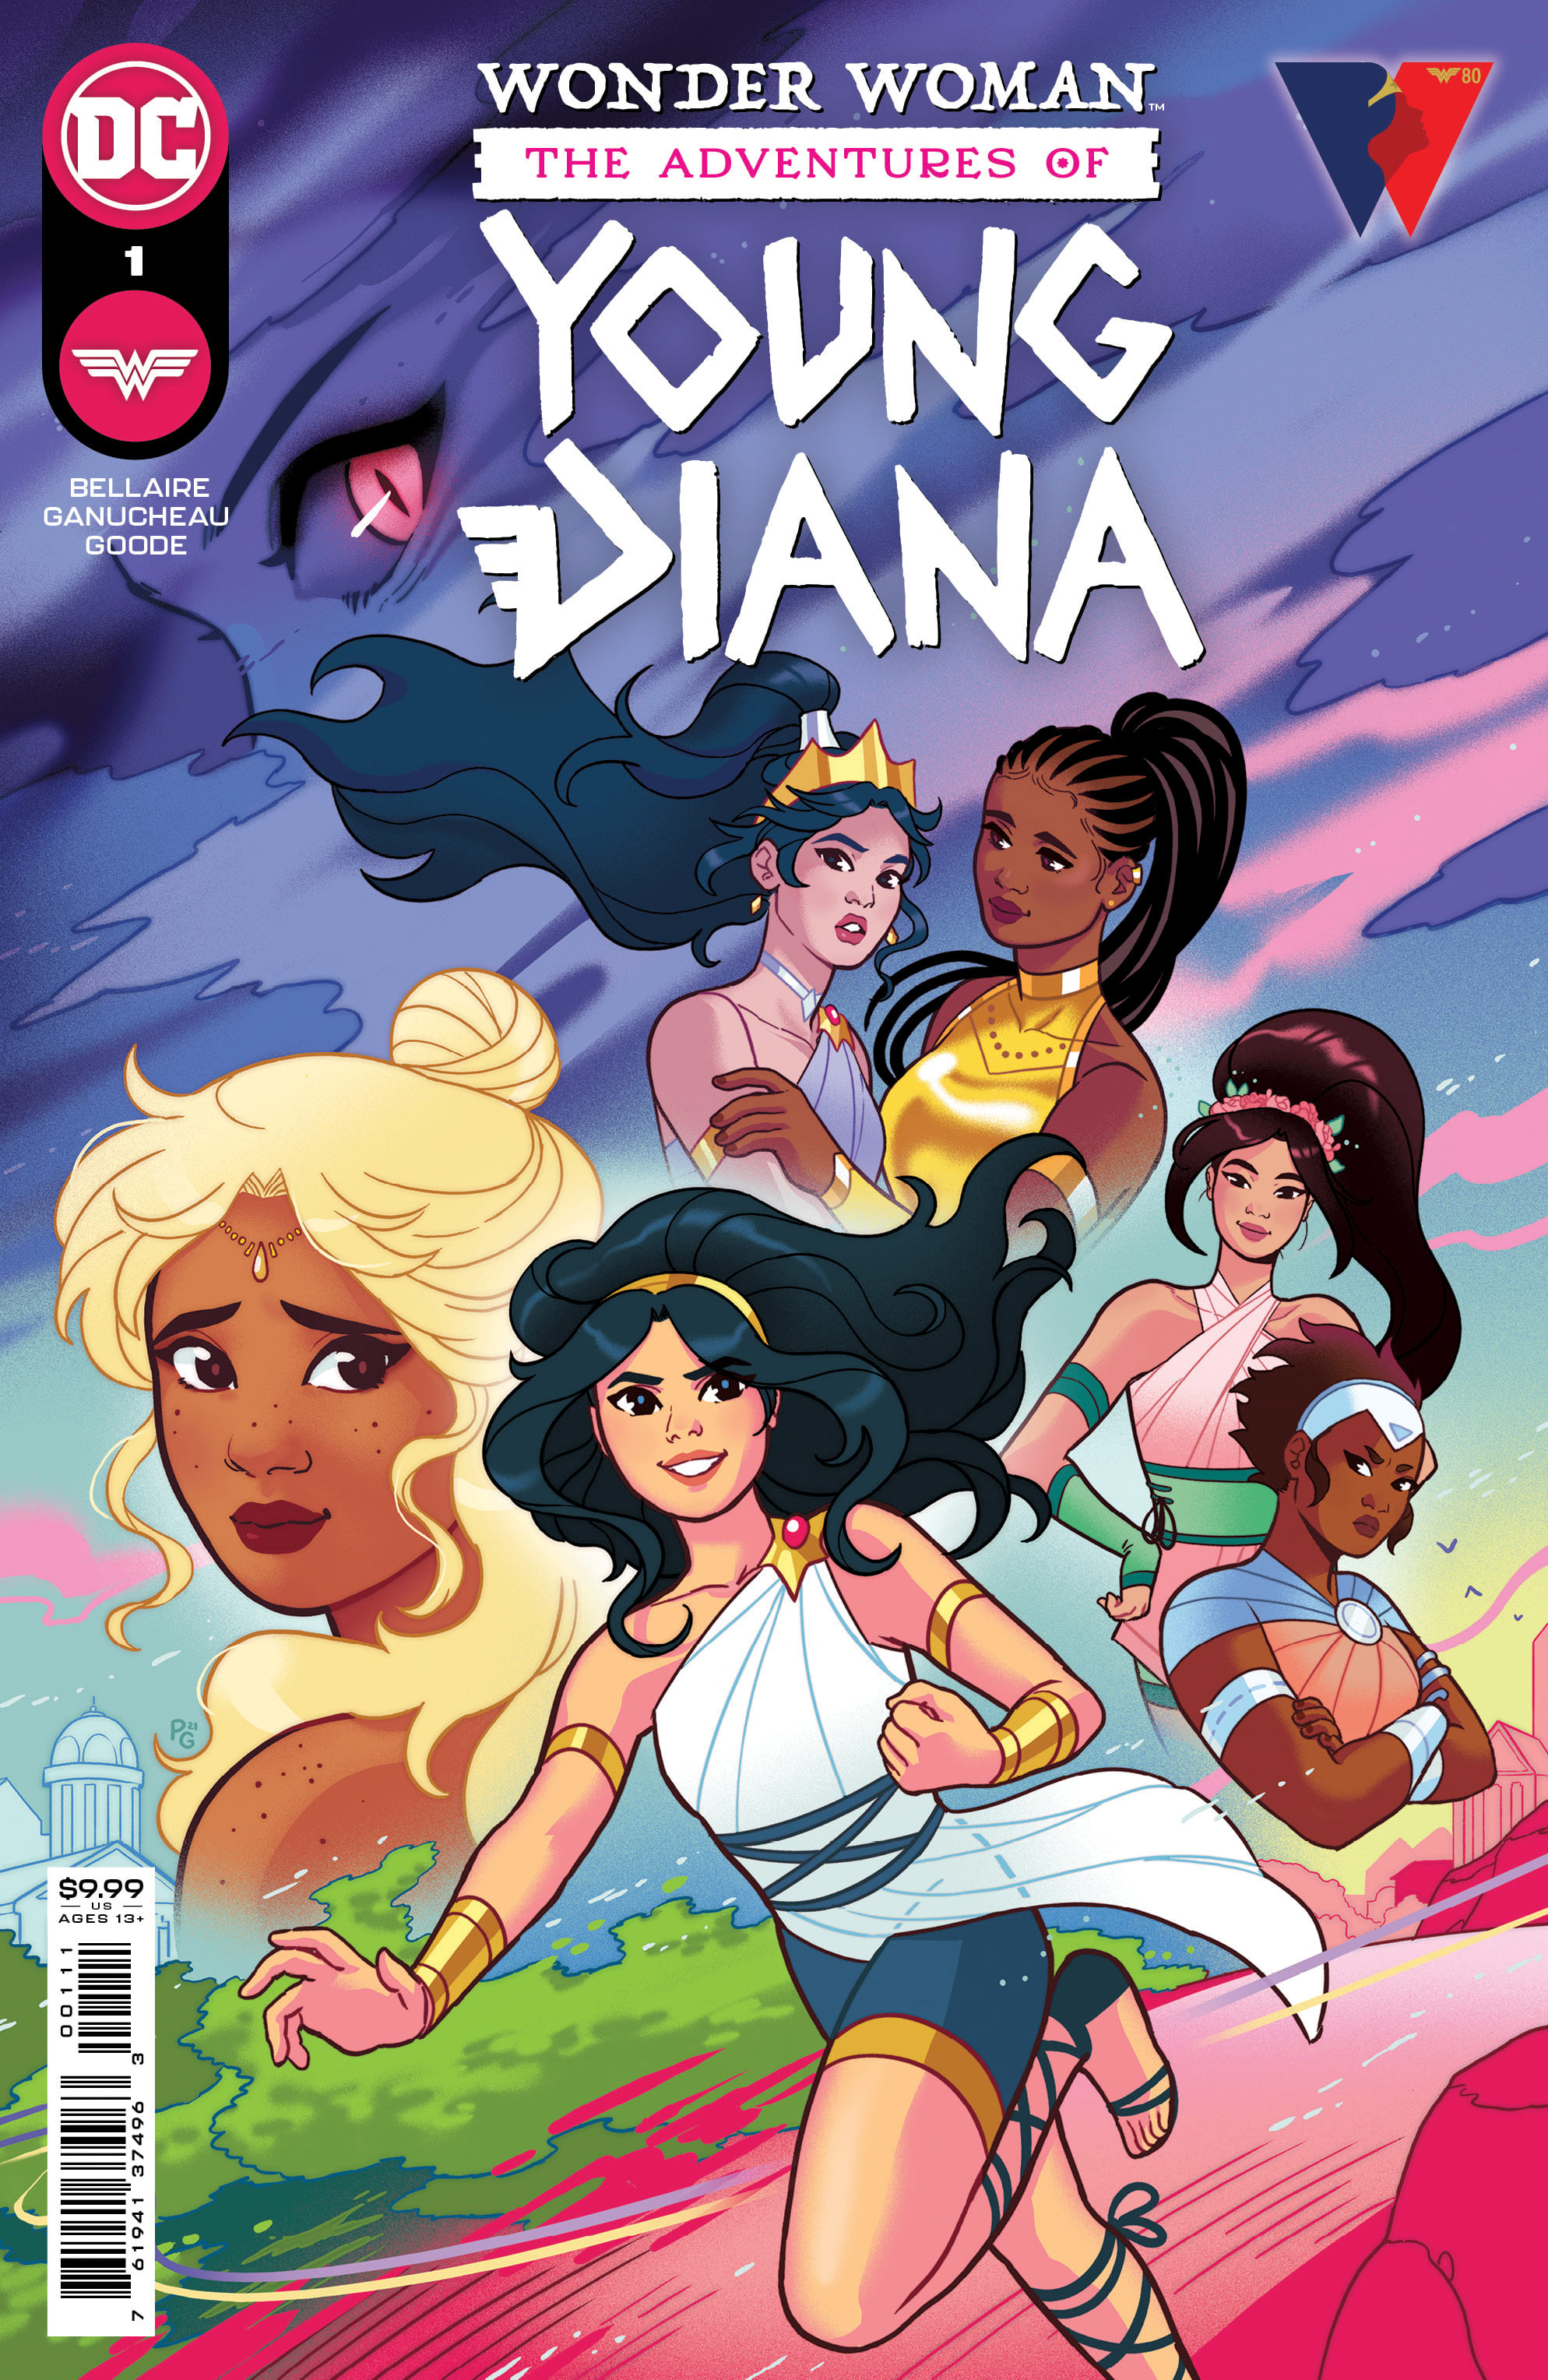 Diana I Women's Superhero Leggings (Wonder Woman) - Orange Bison